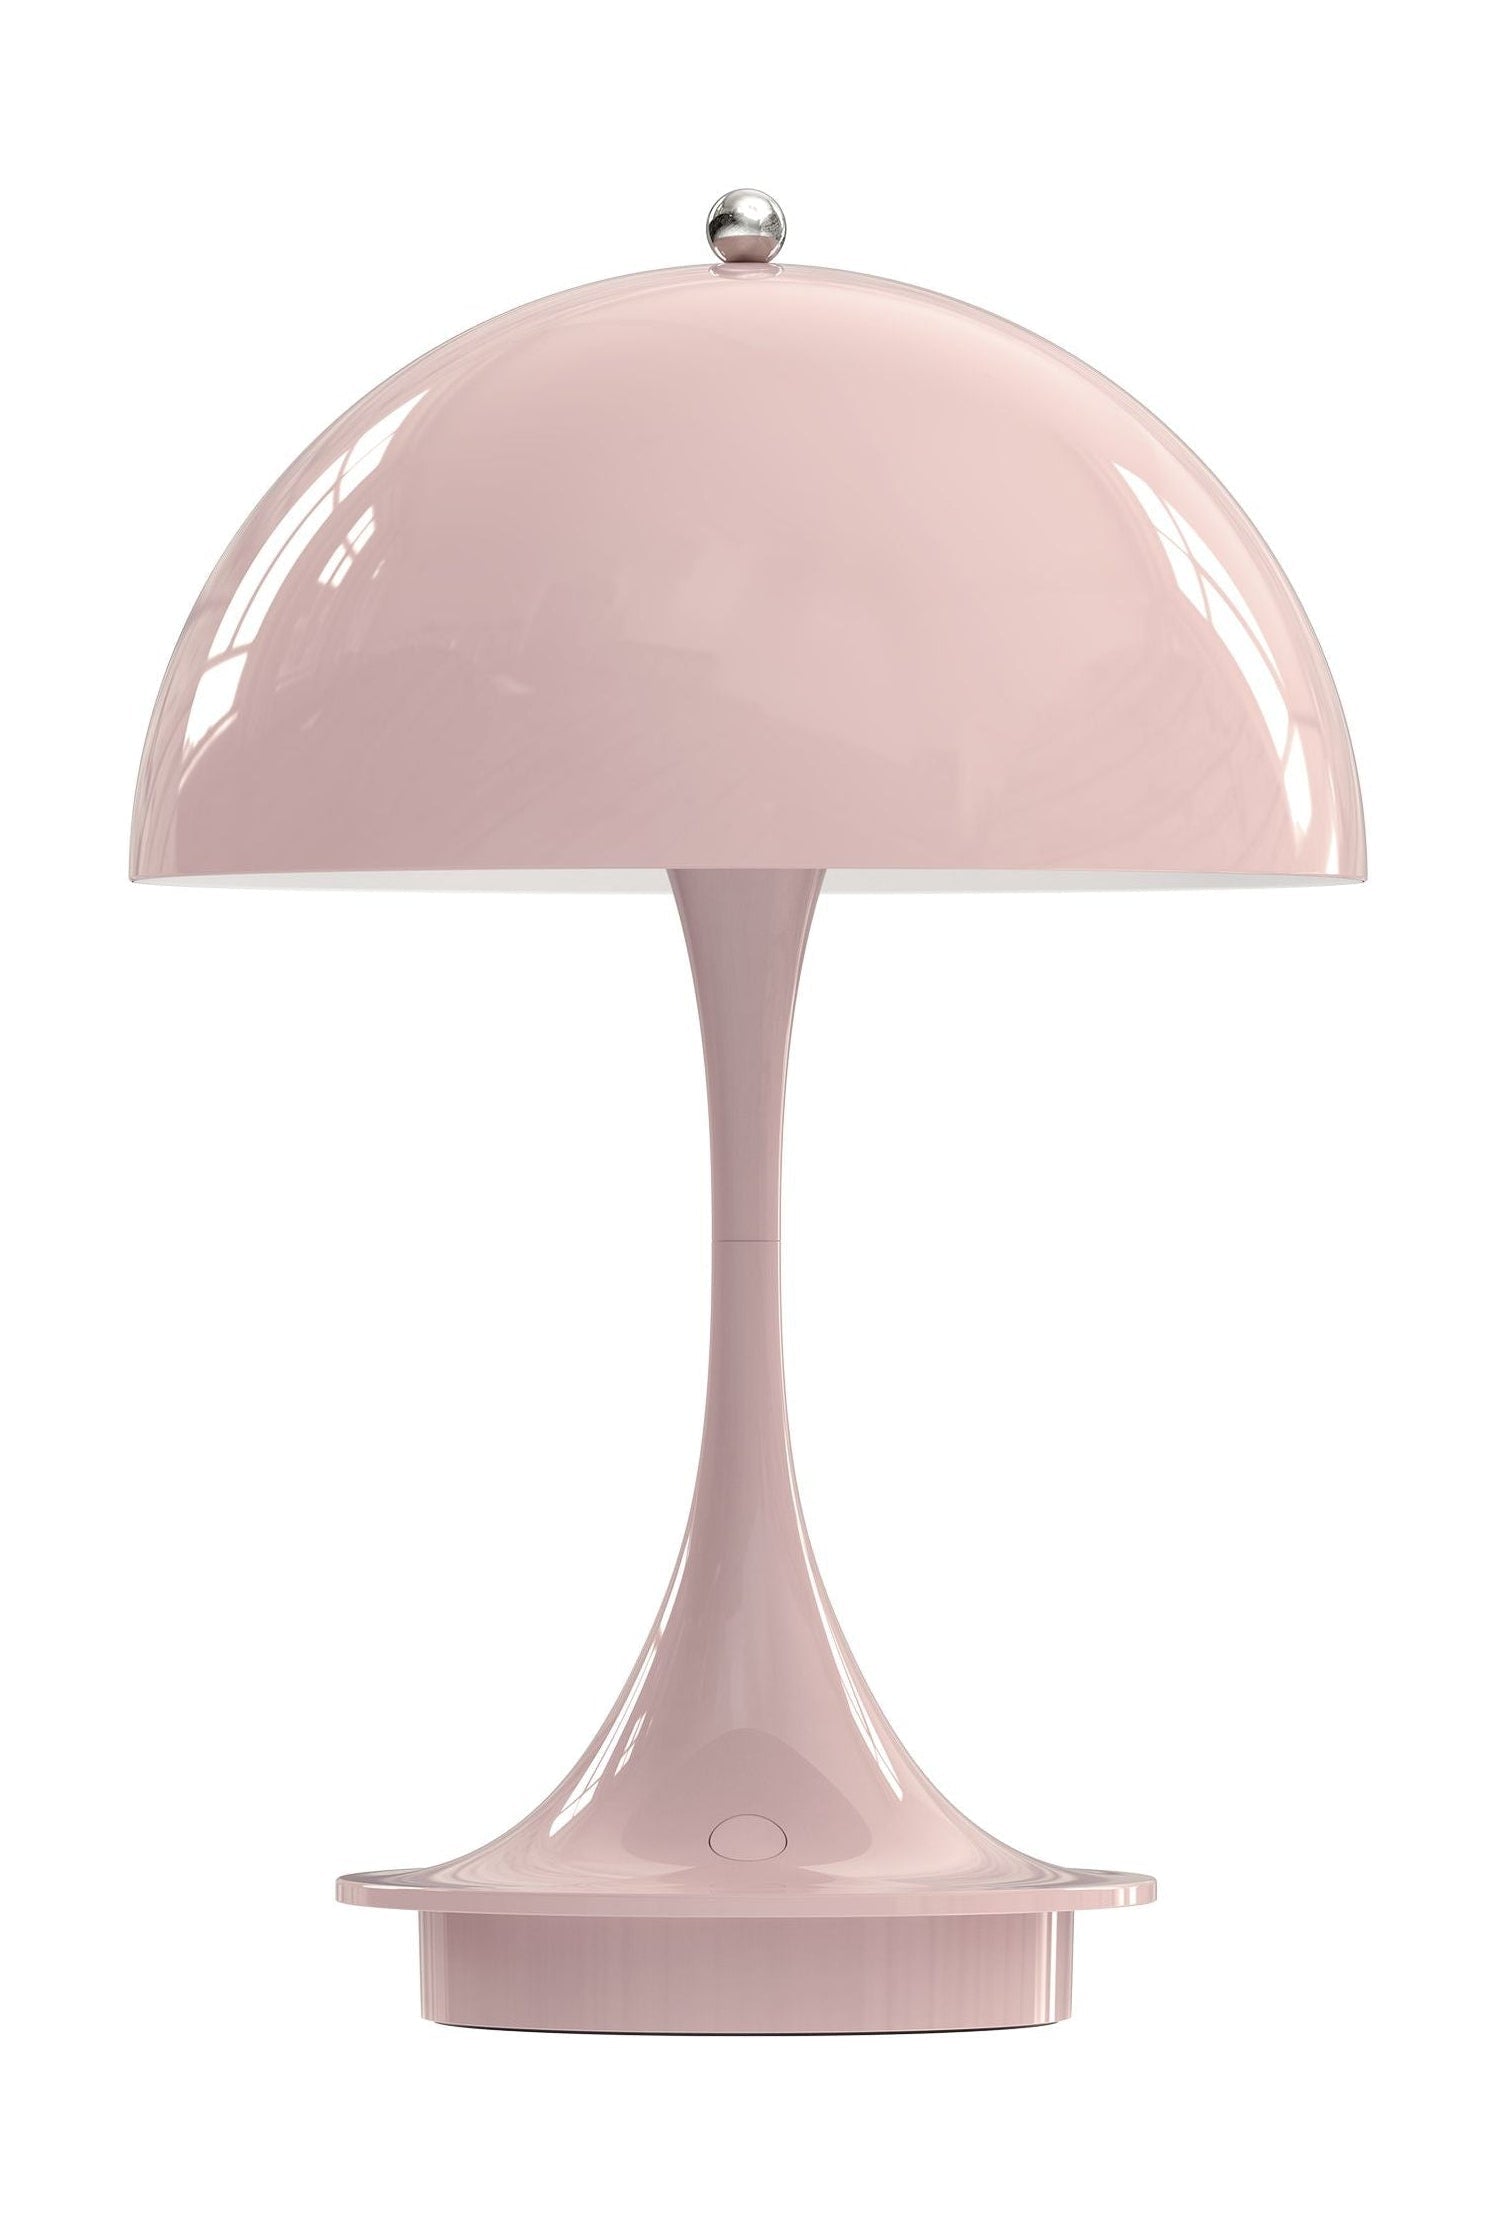 Louis Poulsen Panthella 160 Lampada da tavolo portatile LED 27 K V2, rosa pallida